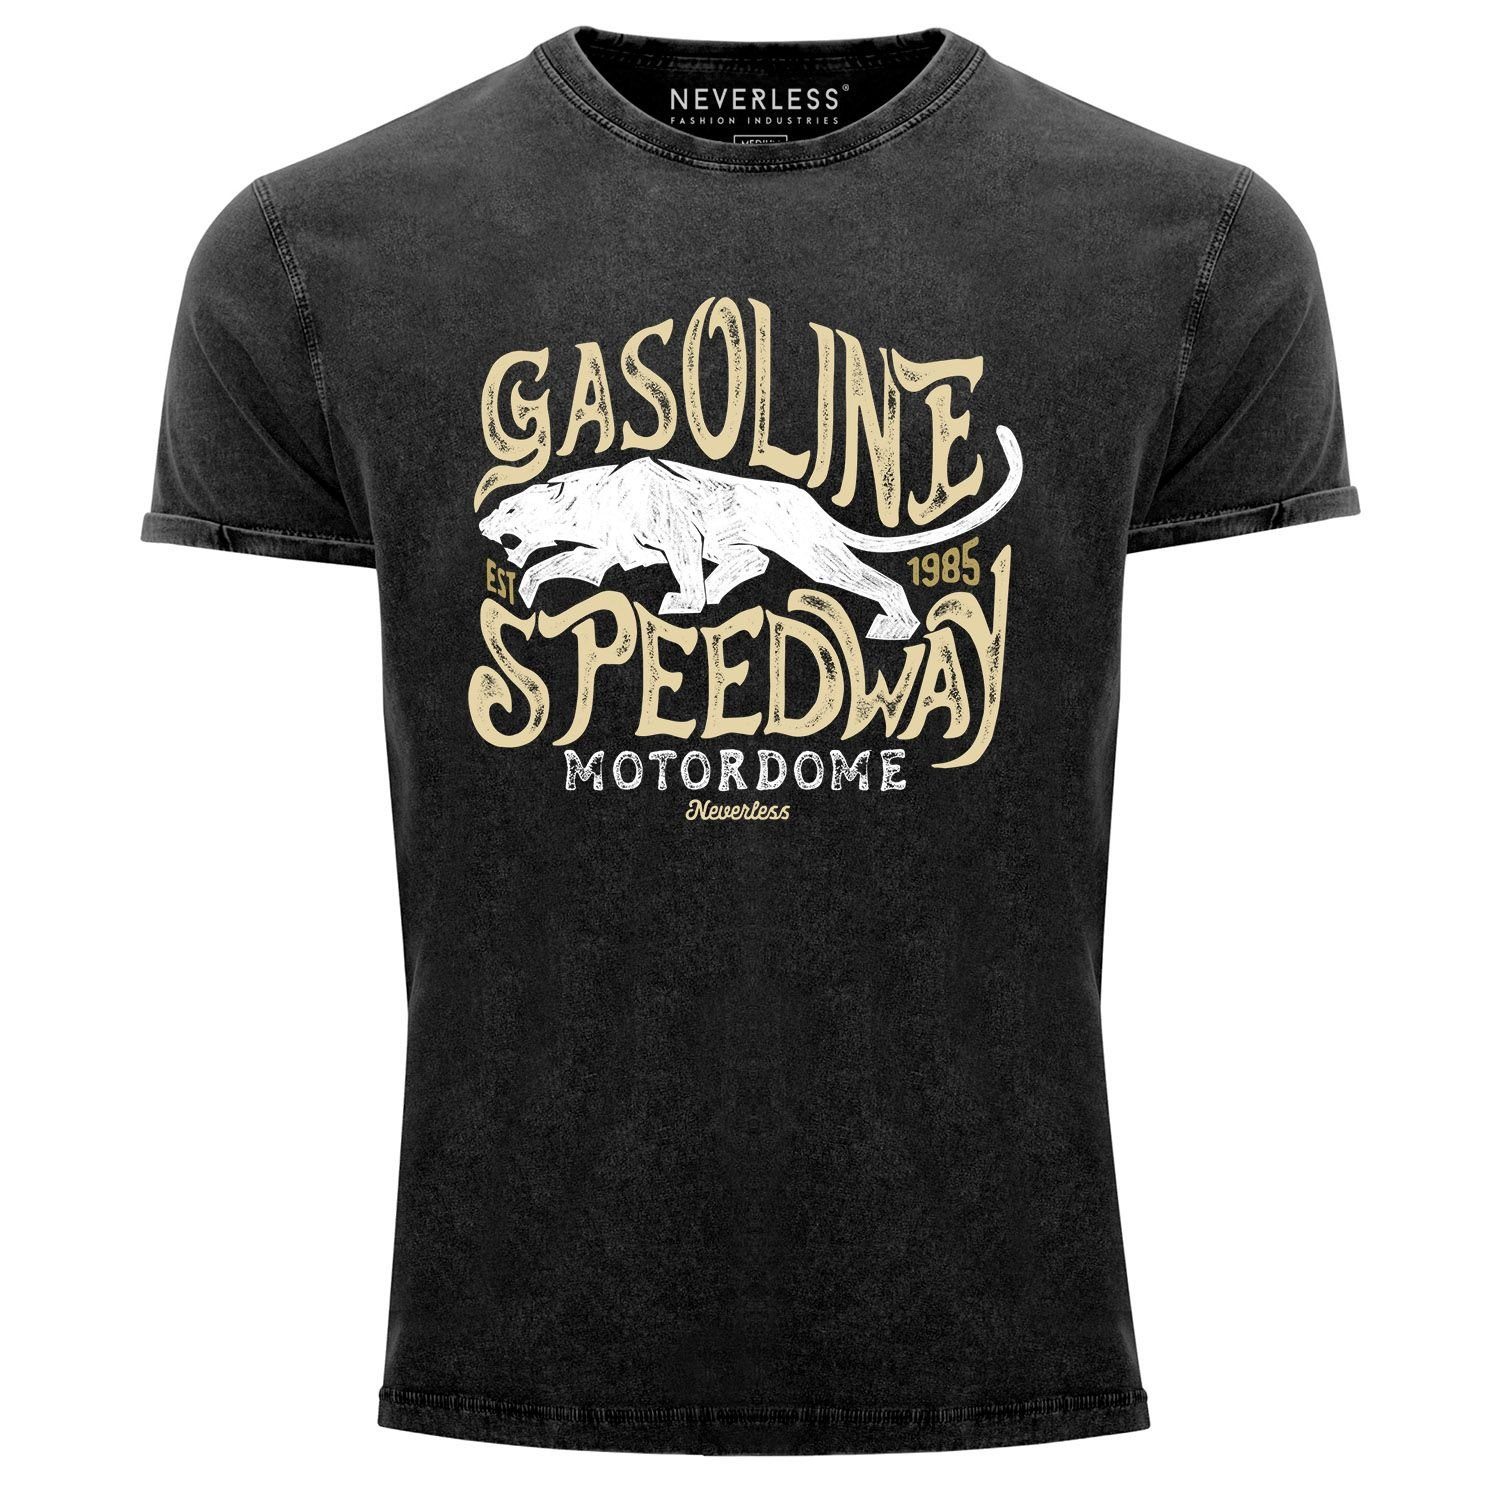 Neverless Print-Shirt Neverless® Herren T-Shirt Vintage Shirt Printshirt Gasoline Speedway Panther Motiv Used Look Slim Fit mit Print schwarz